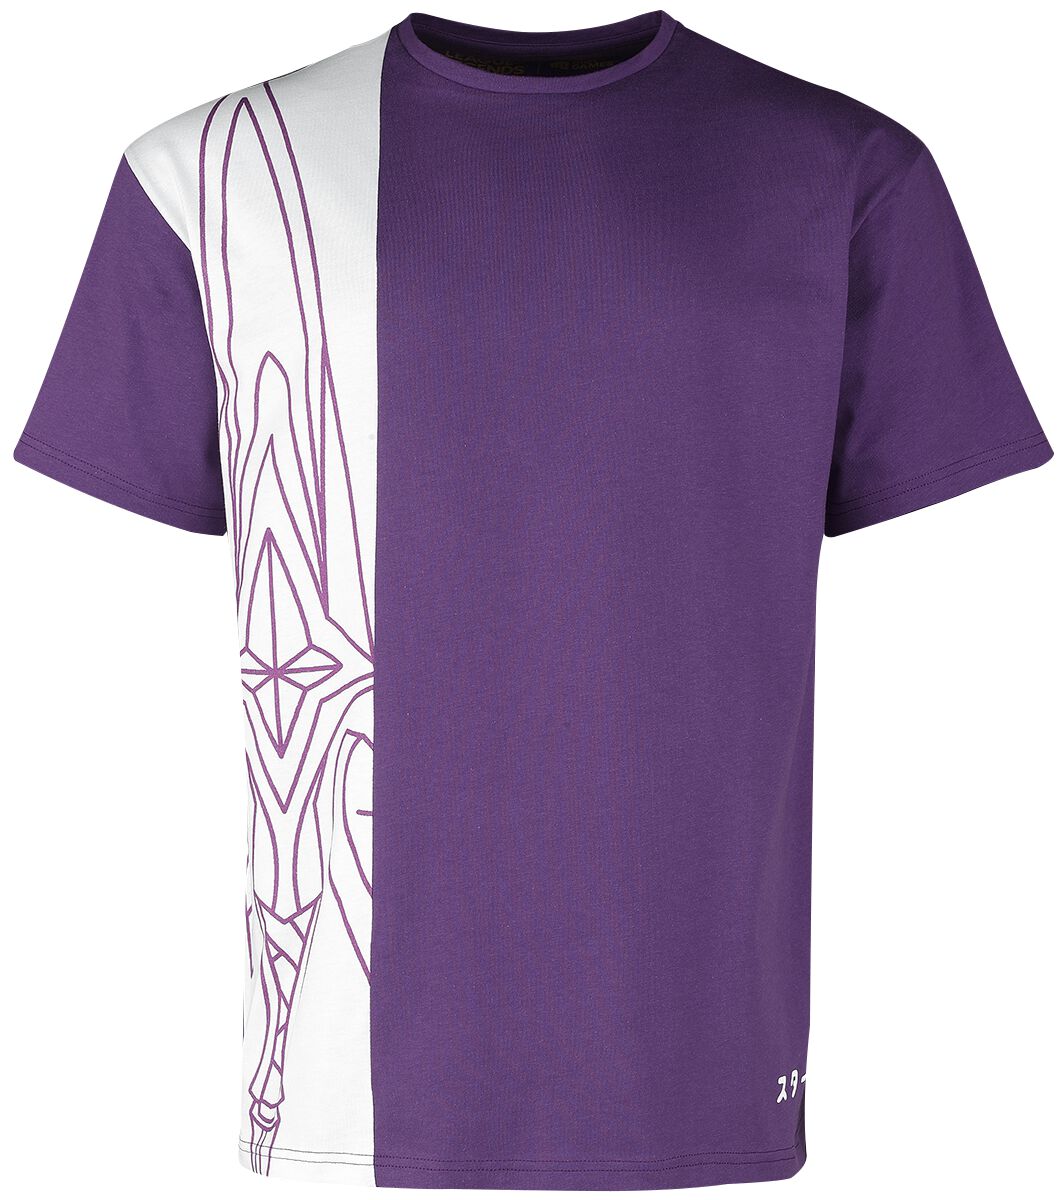 League Of Legends - Gaming T-Shirt - Star Guardian - Akali - M bis L - für Männer - Größe L - weiß/lila  - EMP exklusives Merchandise!